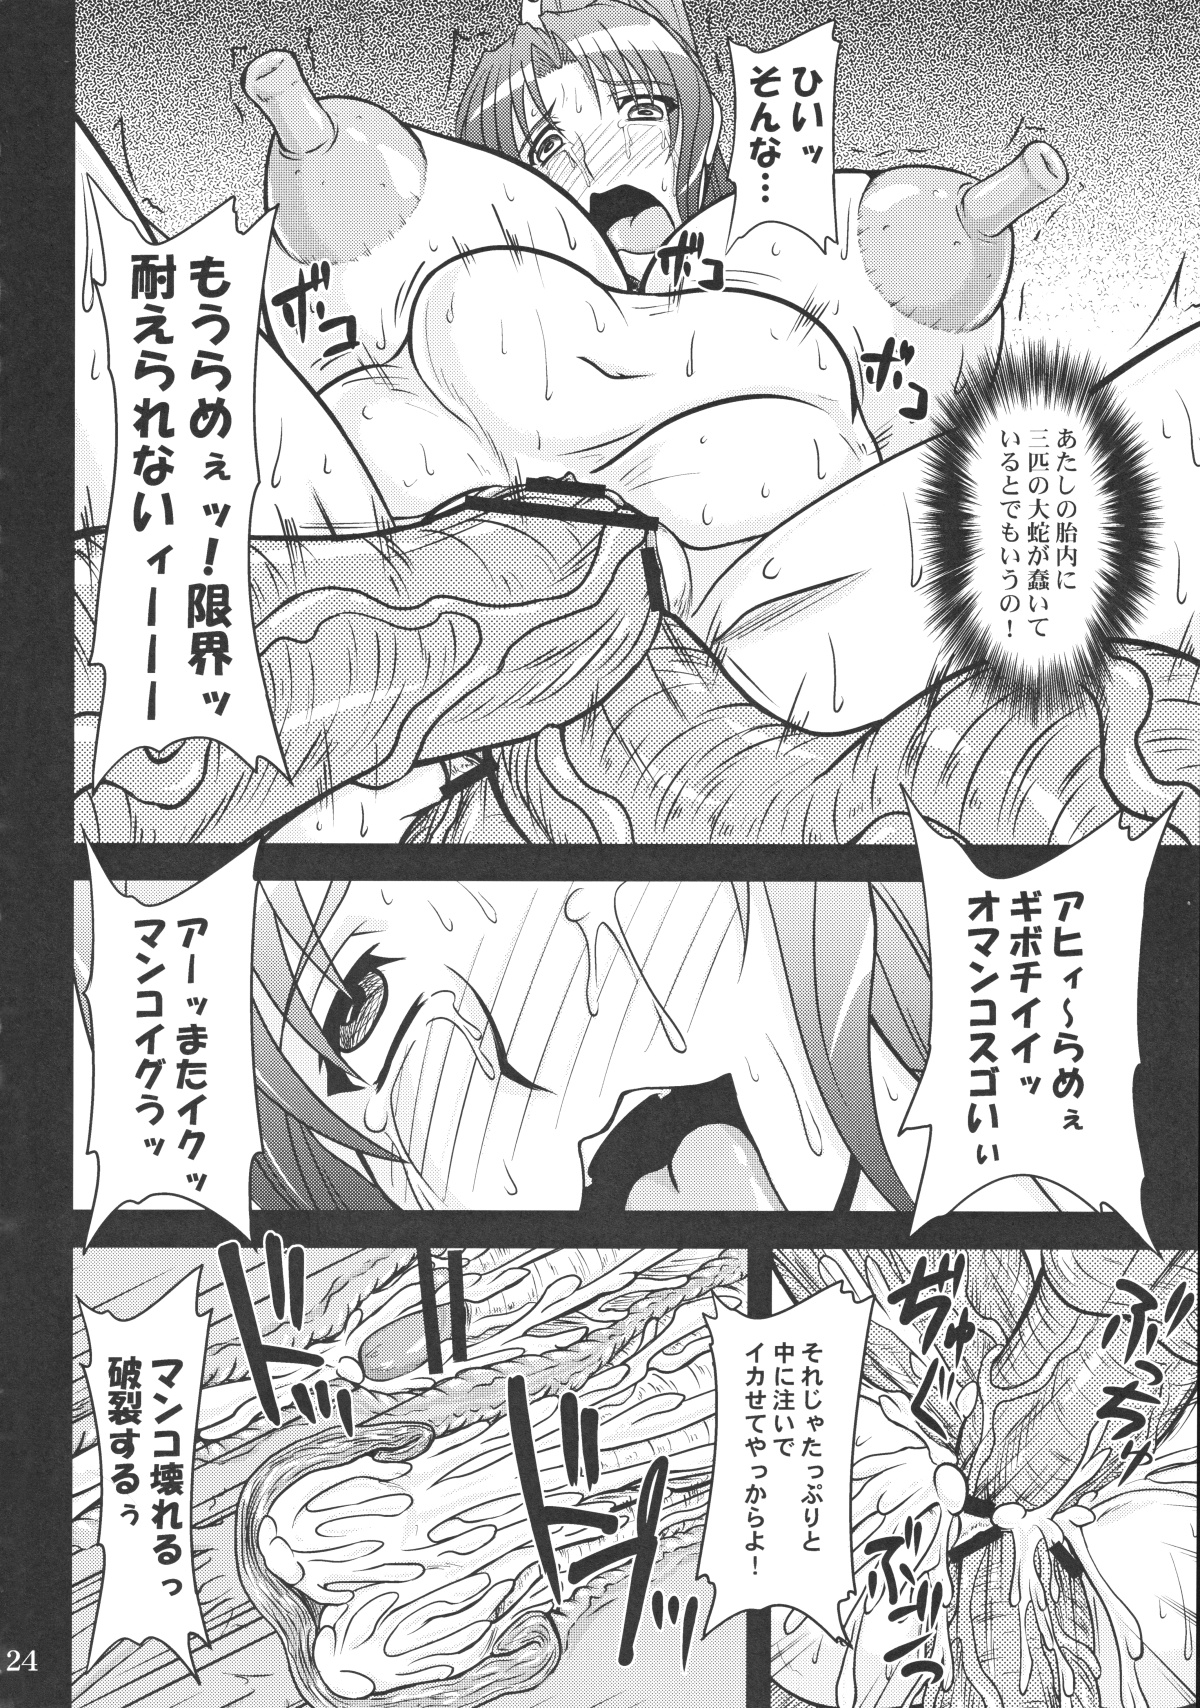 [Anglachel] Shiranui Mai to Sanbiki no Orochi (Mai Shiranui and the Orochi Trio) (King of Fighters) [アングラヘル] 不知火舞と三匹の大蛇